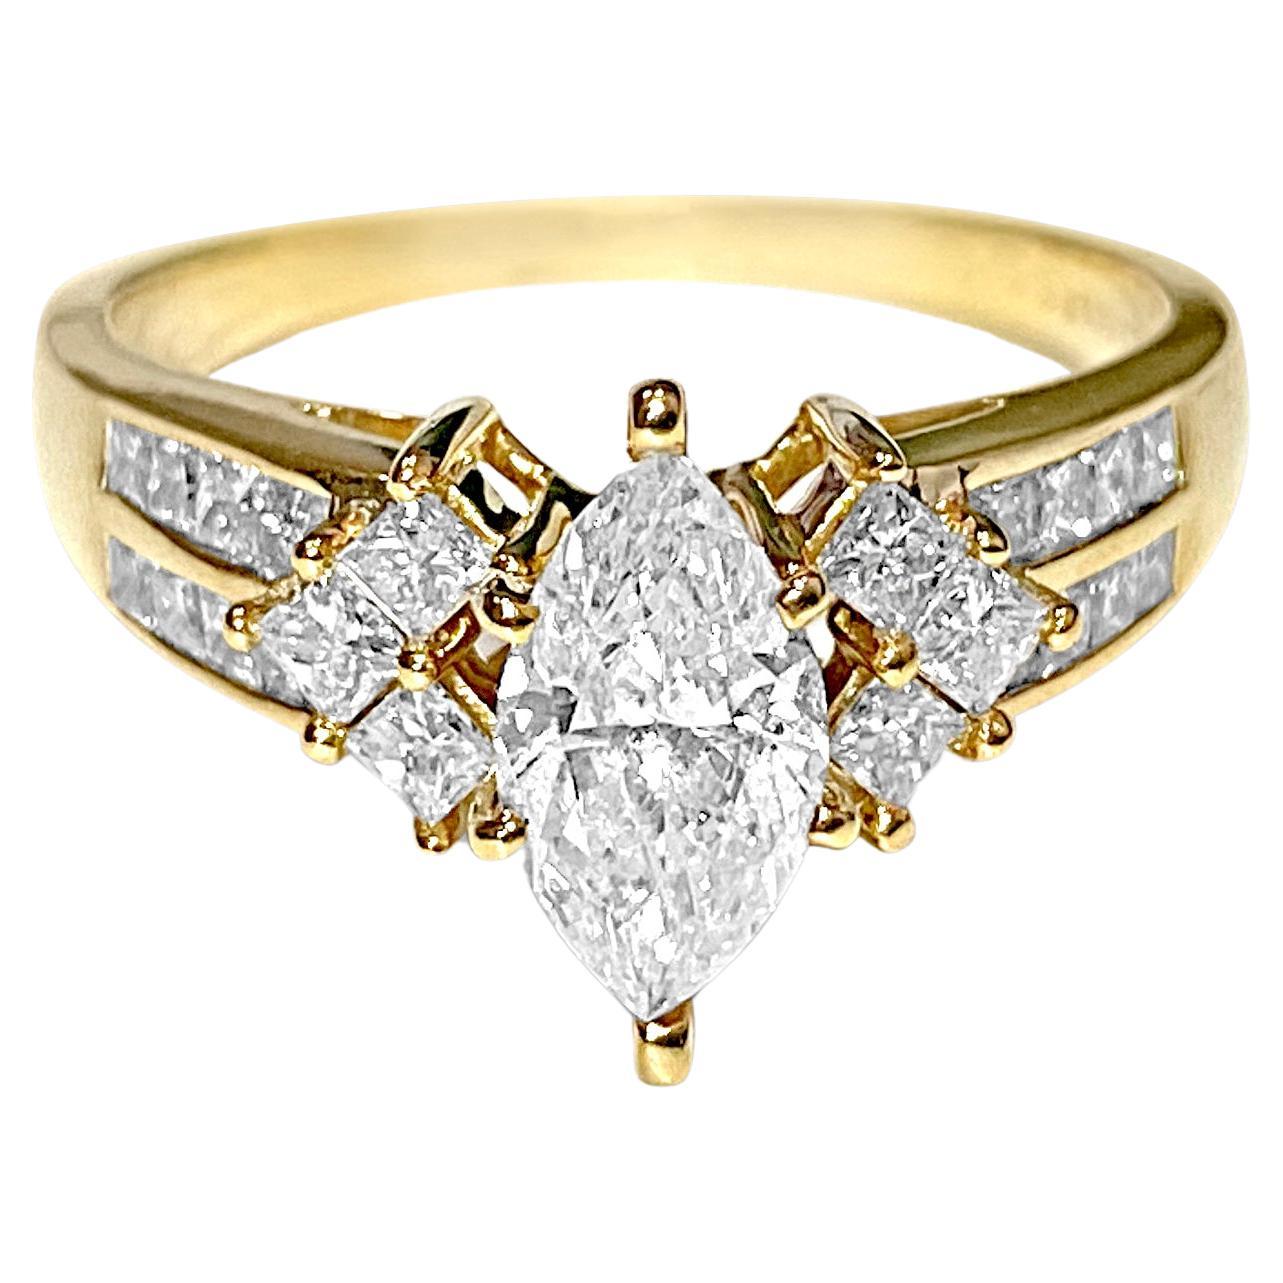 14K Yellow gold. 0.80CT Marquise Cut Diamond Ring